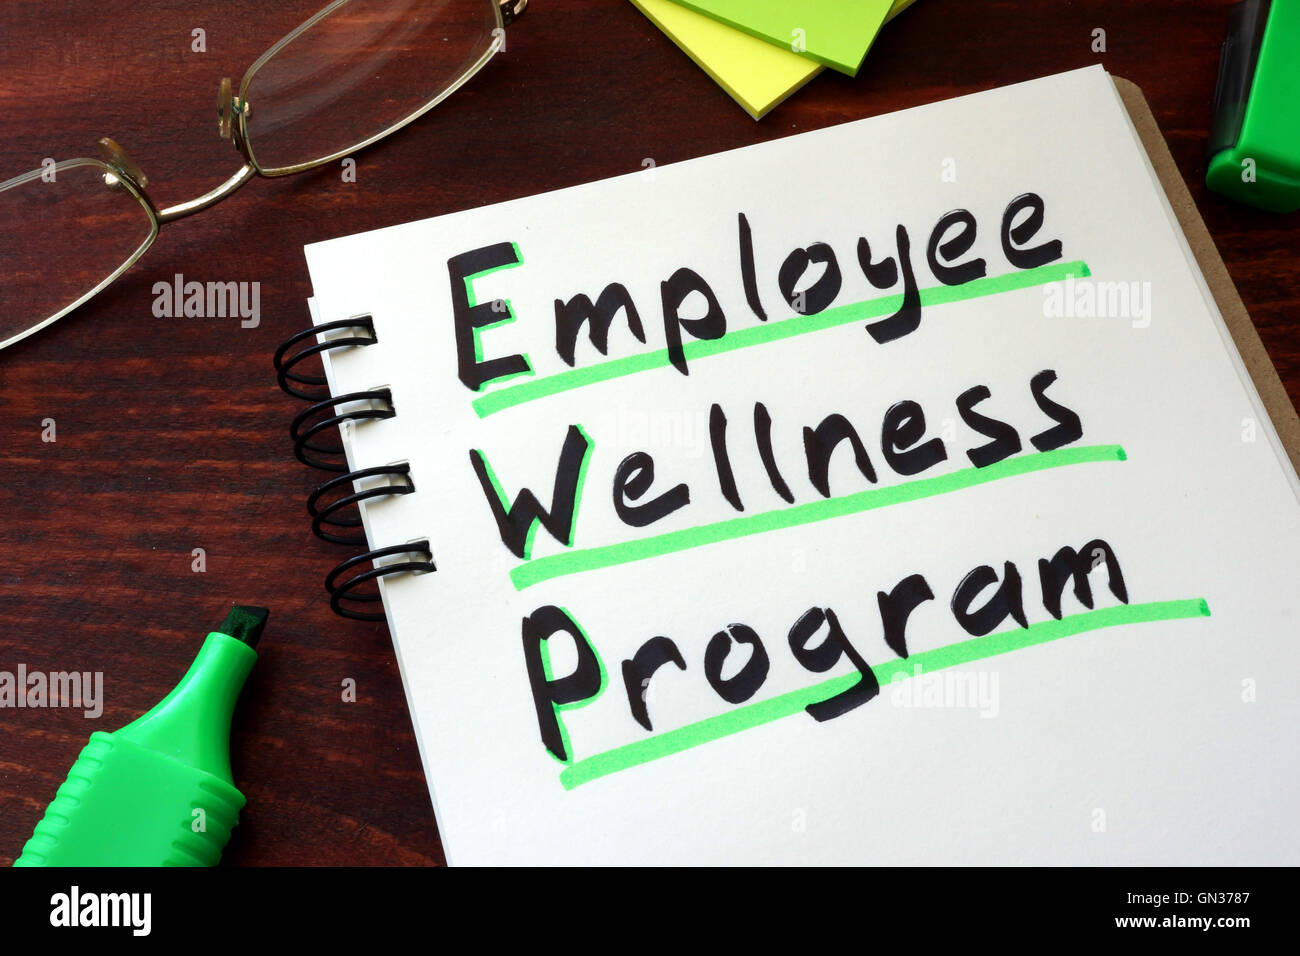 Employee Wellness program written on a notepad with marker. Stock Photo